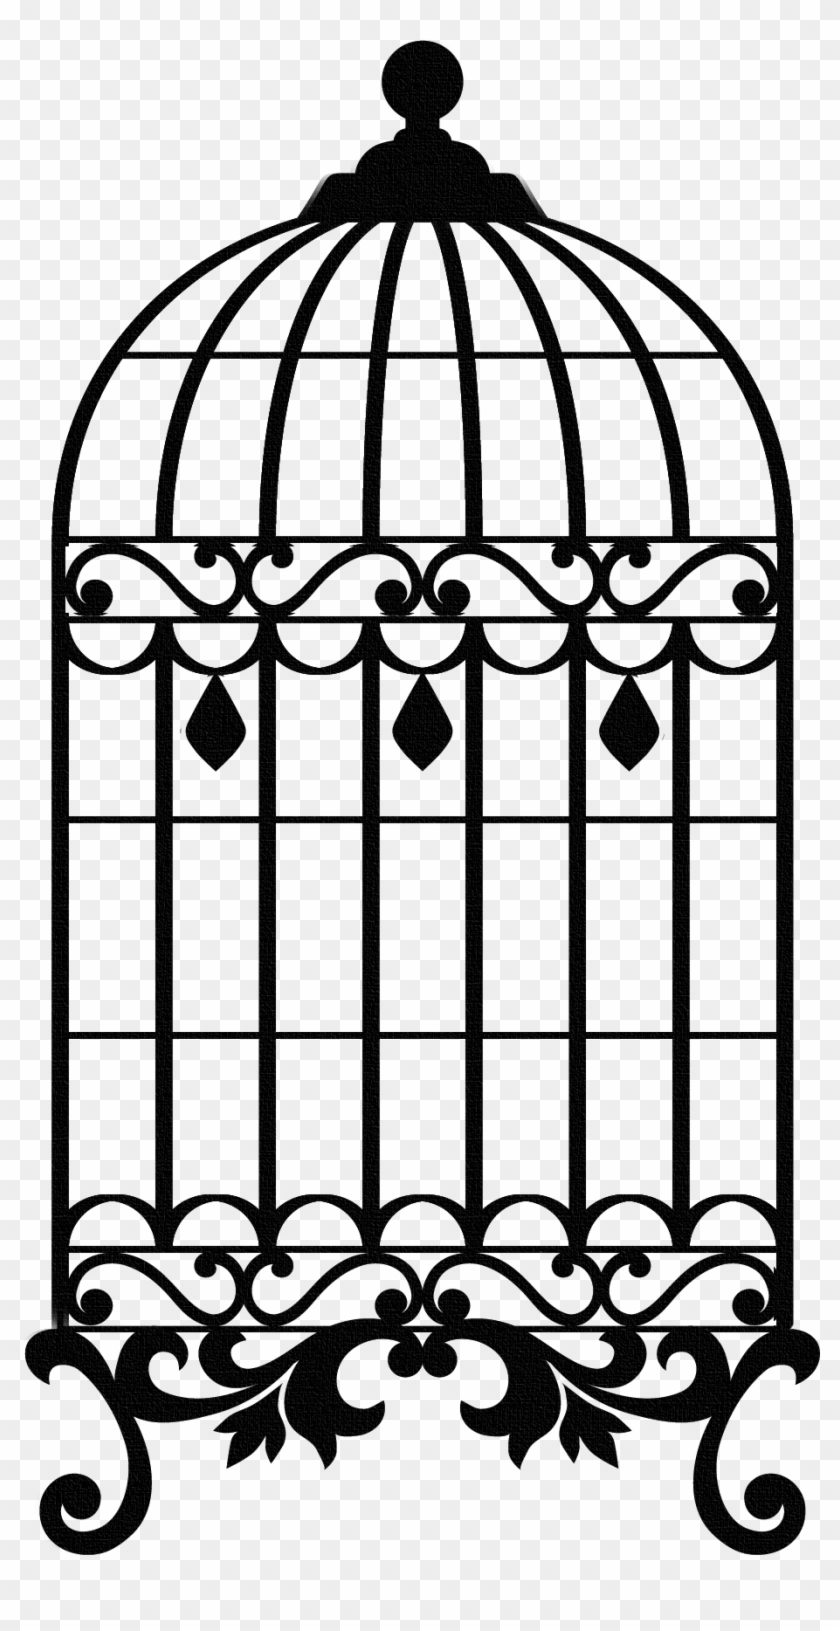 Bird Cage - Birds In Cage Clipart #1634642